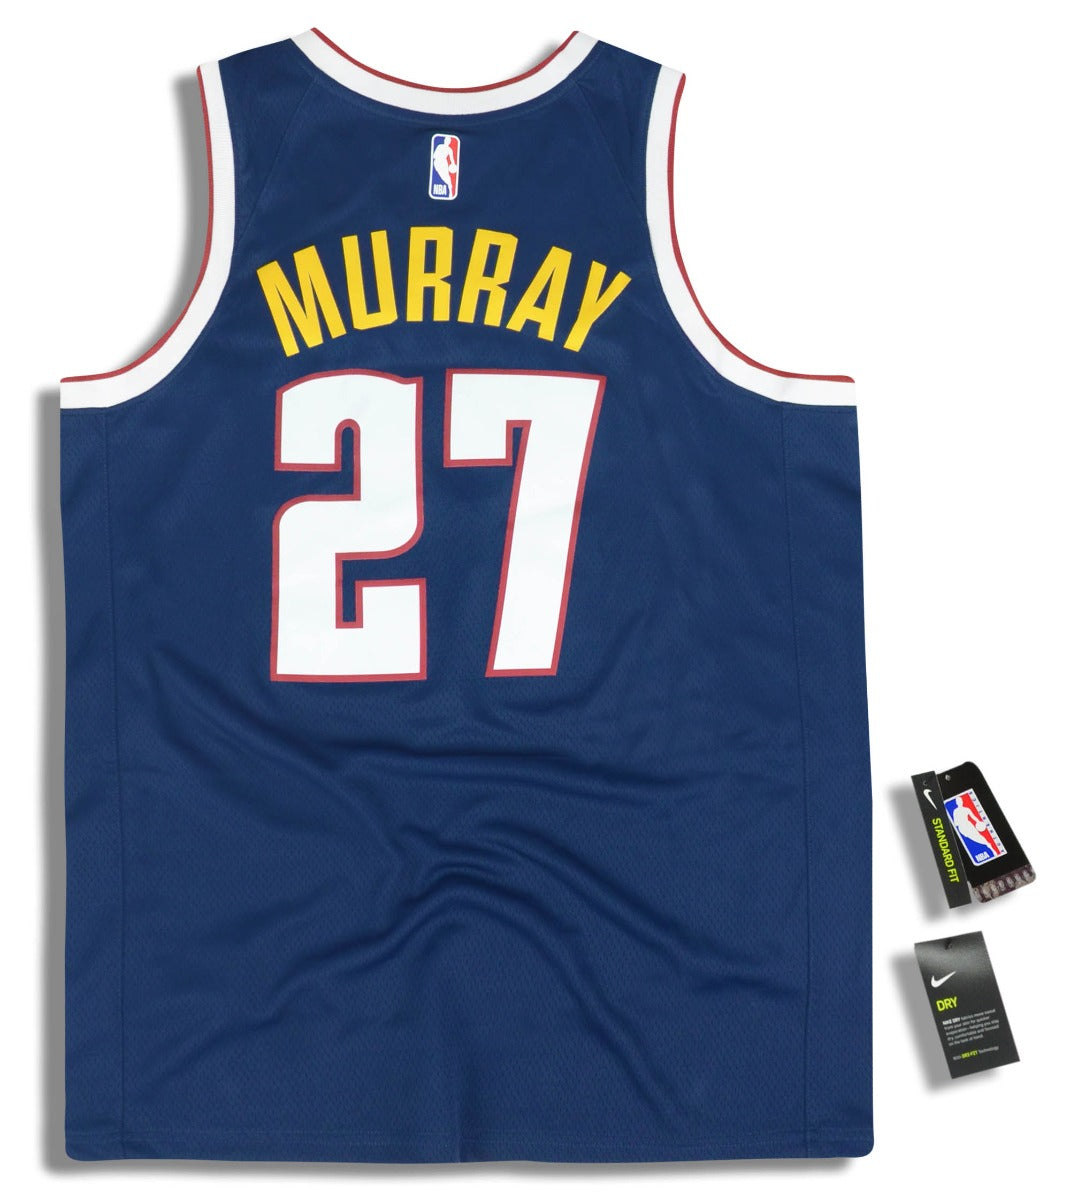 Jamal Murray Denver Nuggets Jersey Toddler 3T Nike Blue NBA Basketball 27  Retro